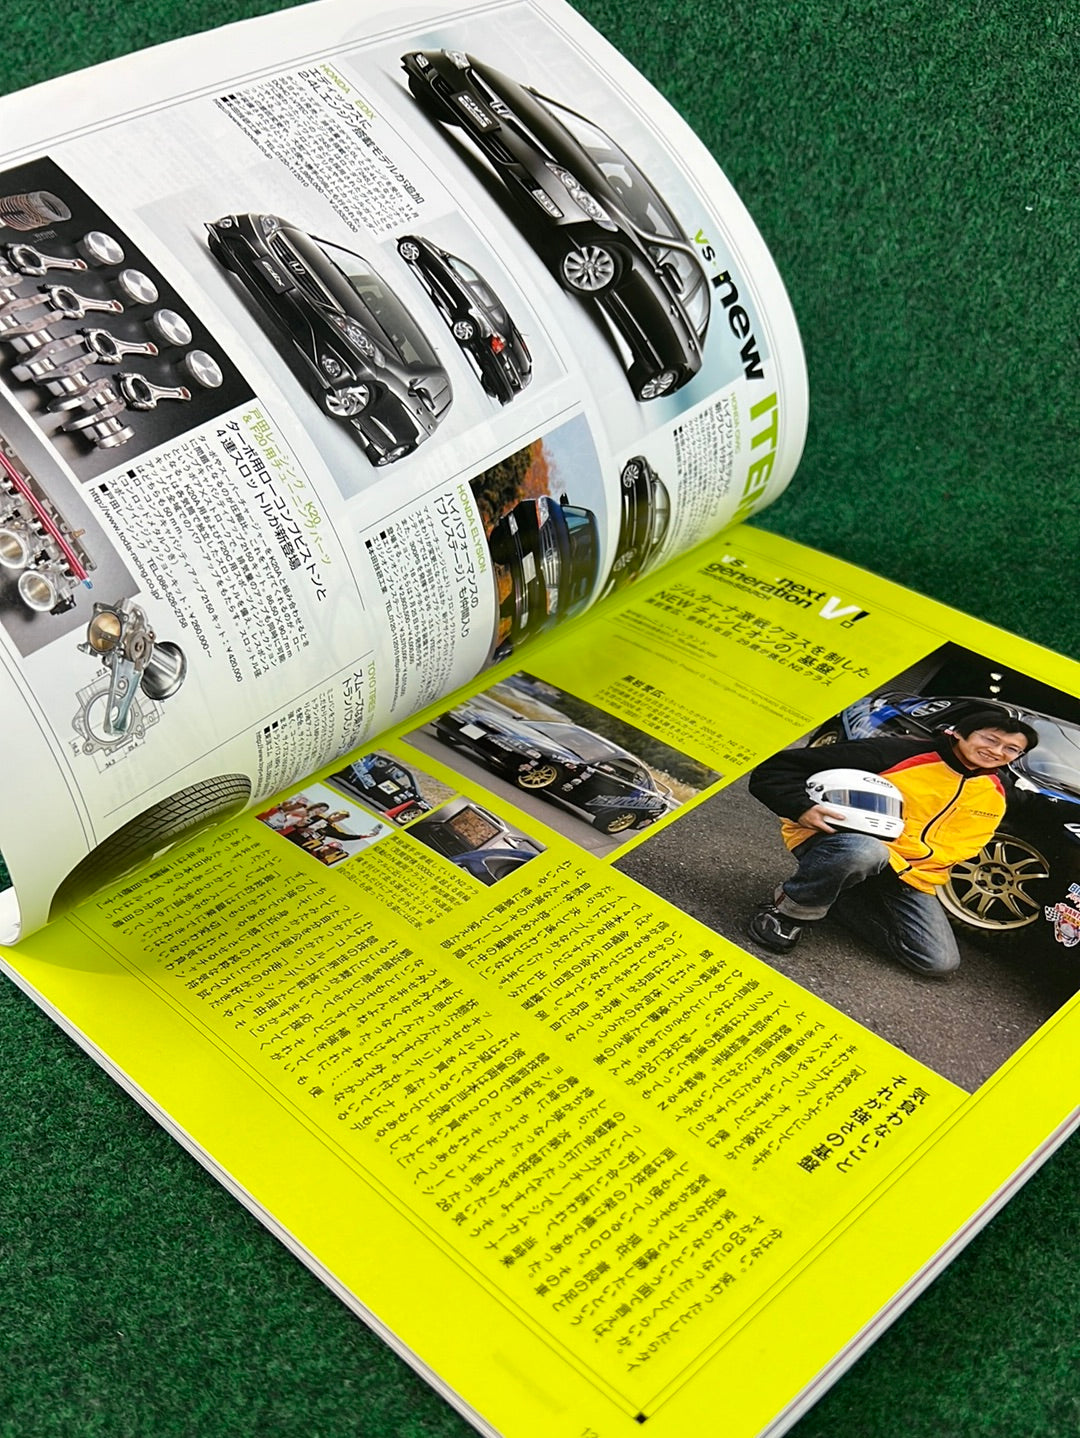 VTEC SPORTS Magazine - Vol. 024